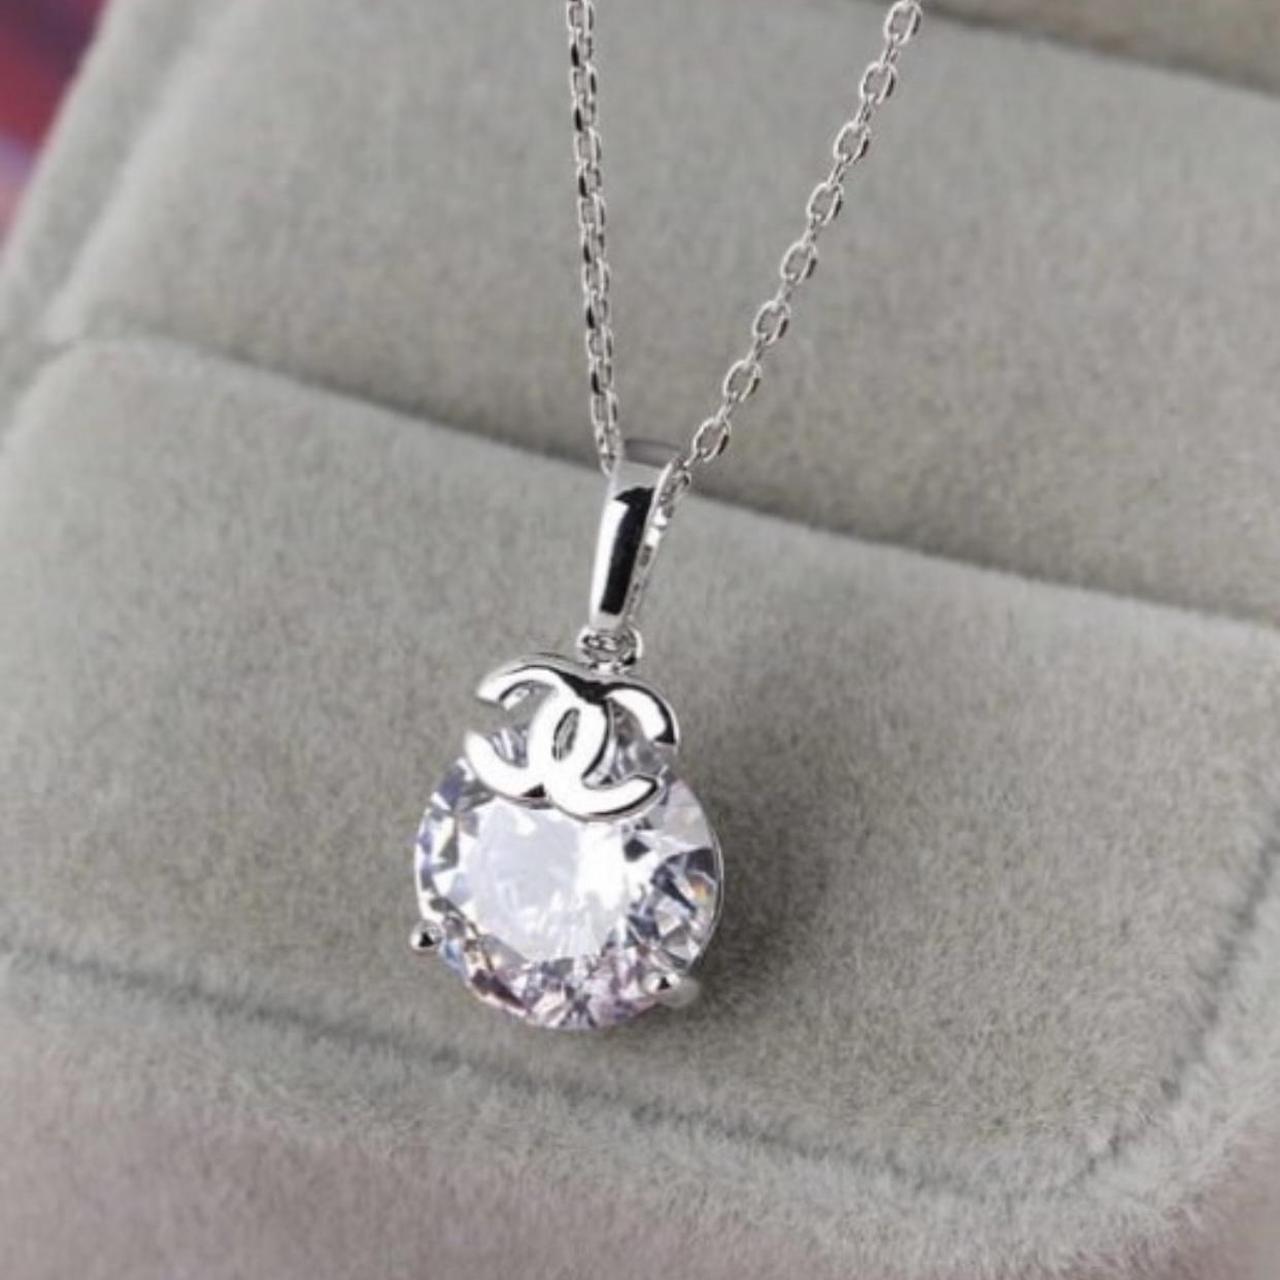 Repurposed diamanté pendant and necklace Free... - Depop